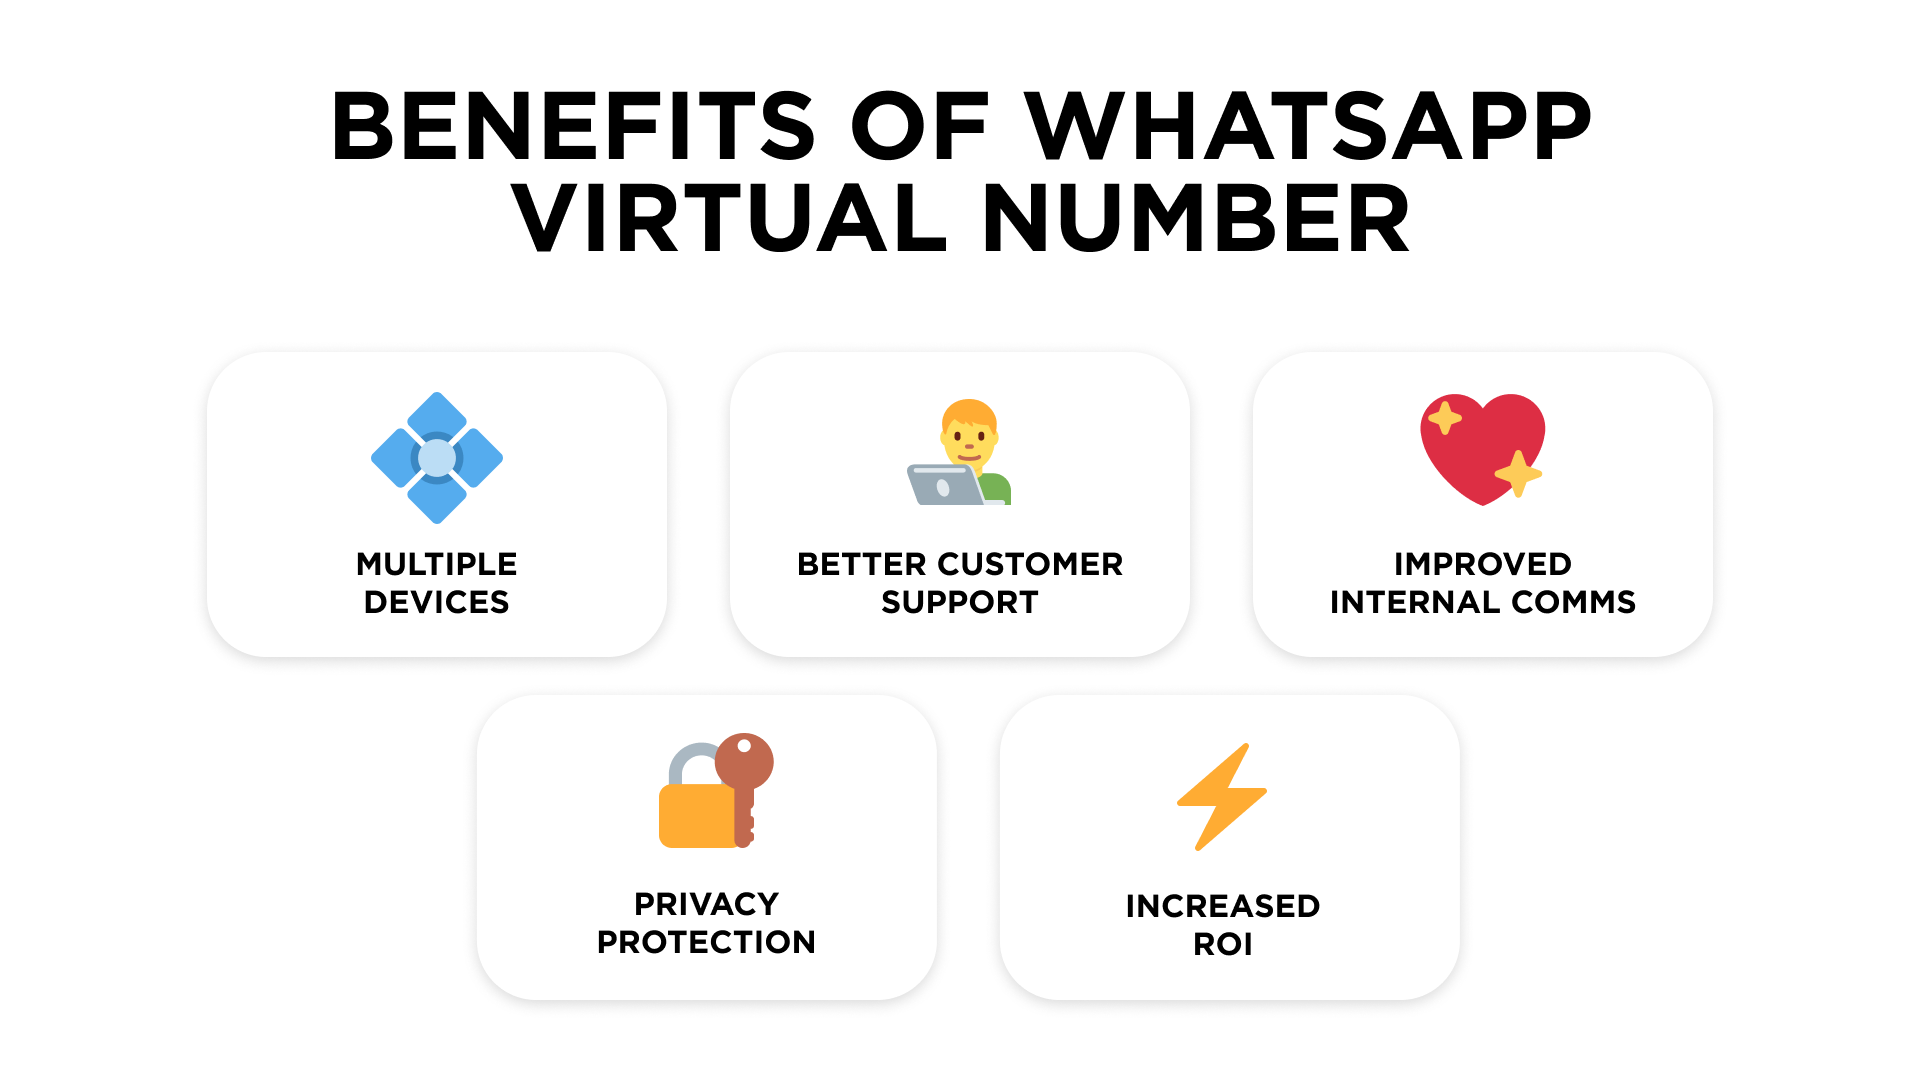 Benefits of WhatsApp Virtual Number